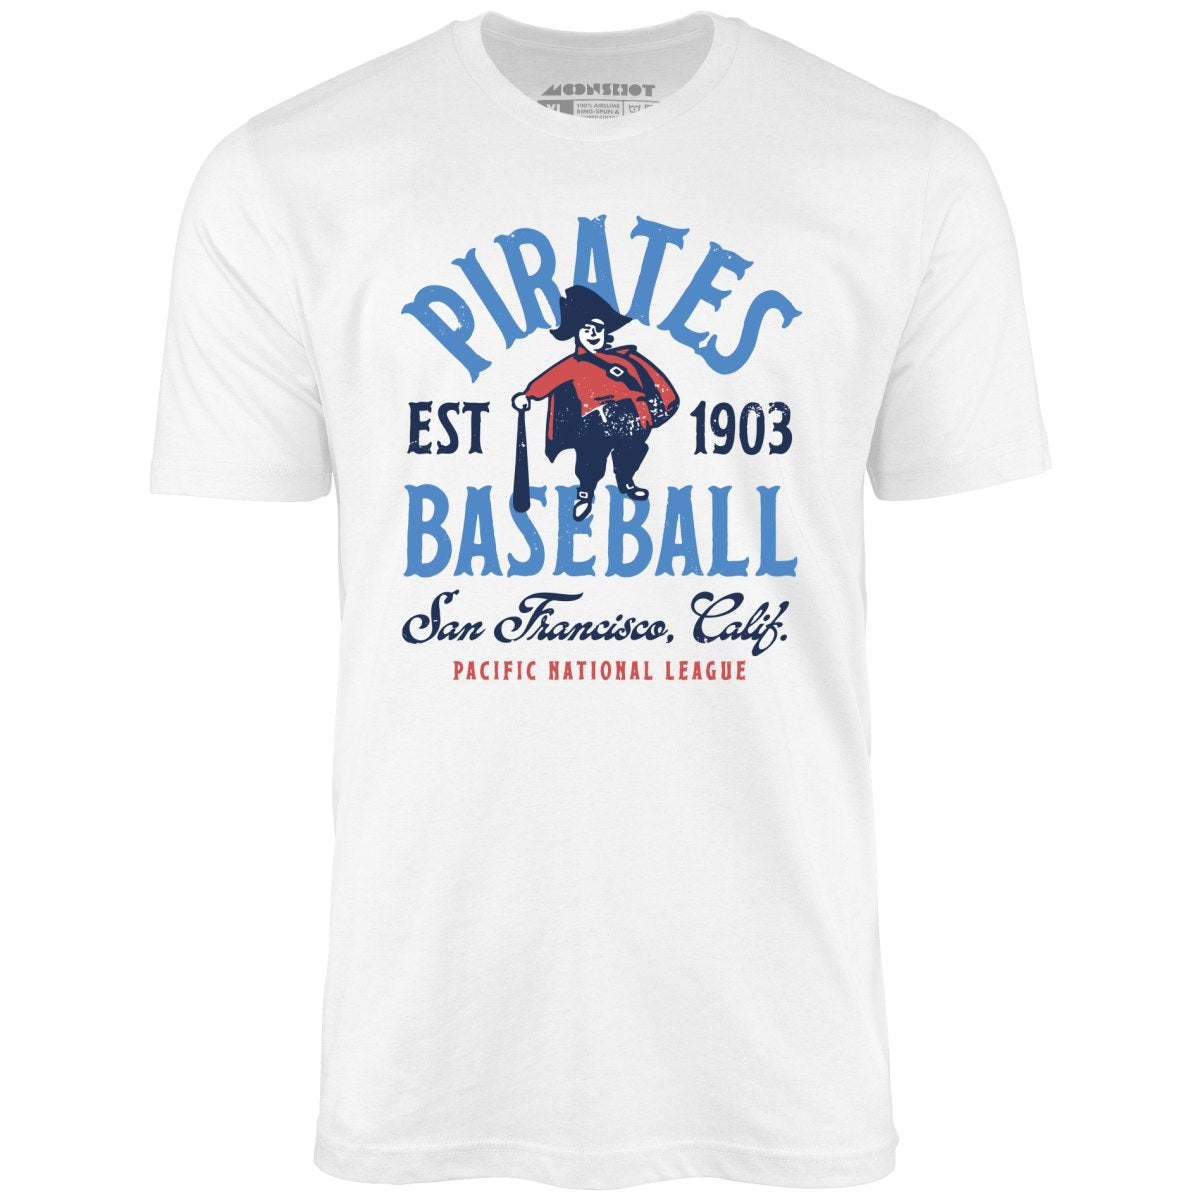 San Francisco Pirates - California - Vintage Defunct Baseball Teams - Unisex T-Shirt